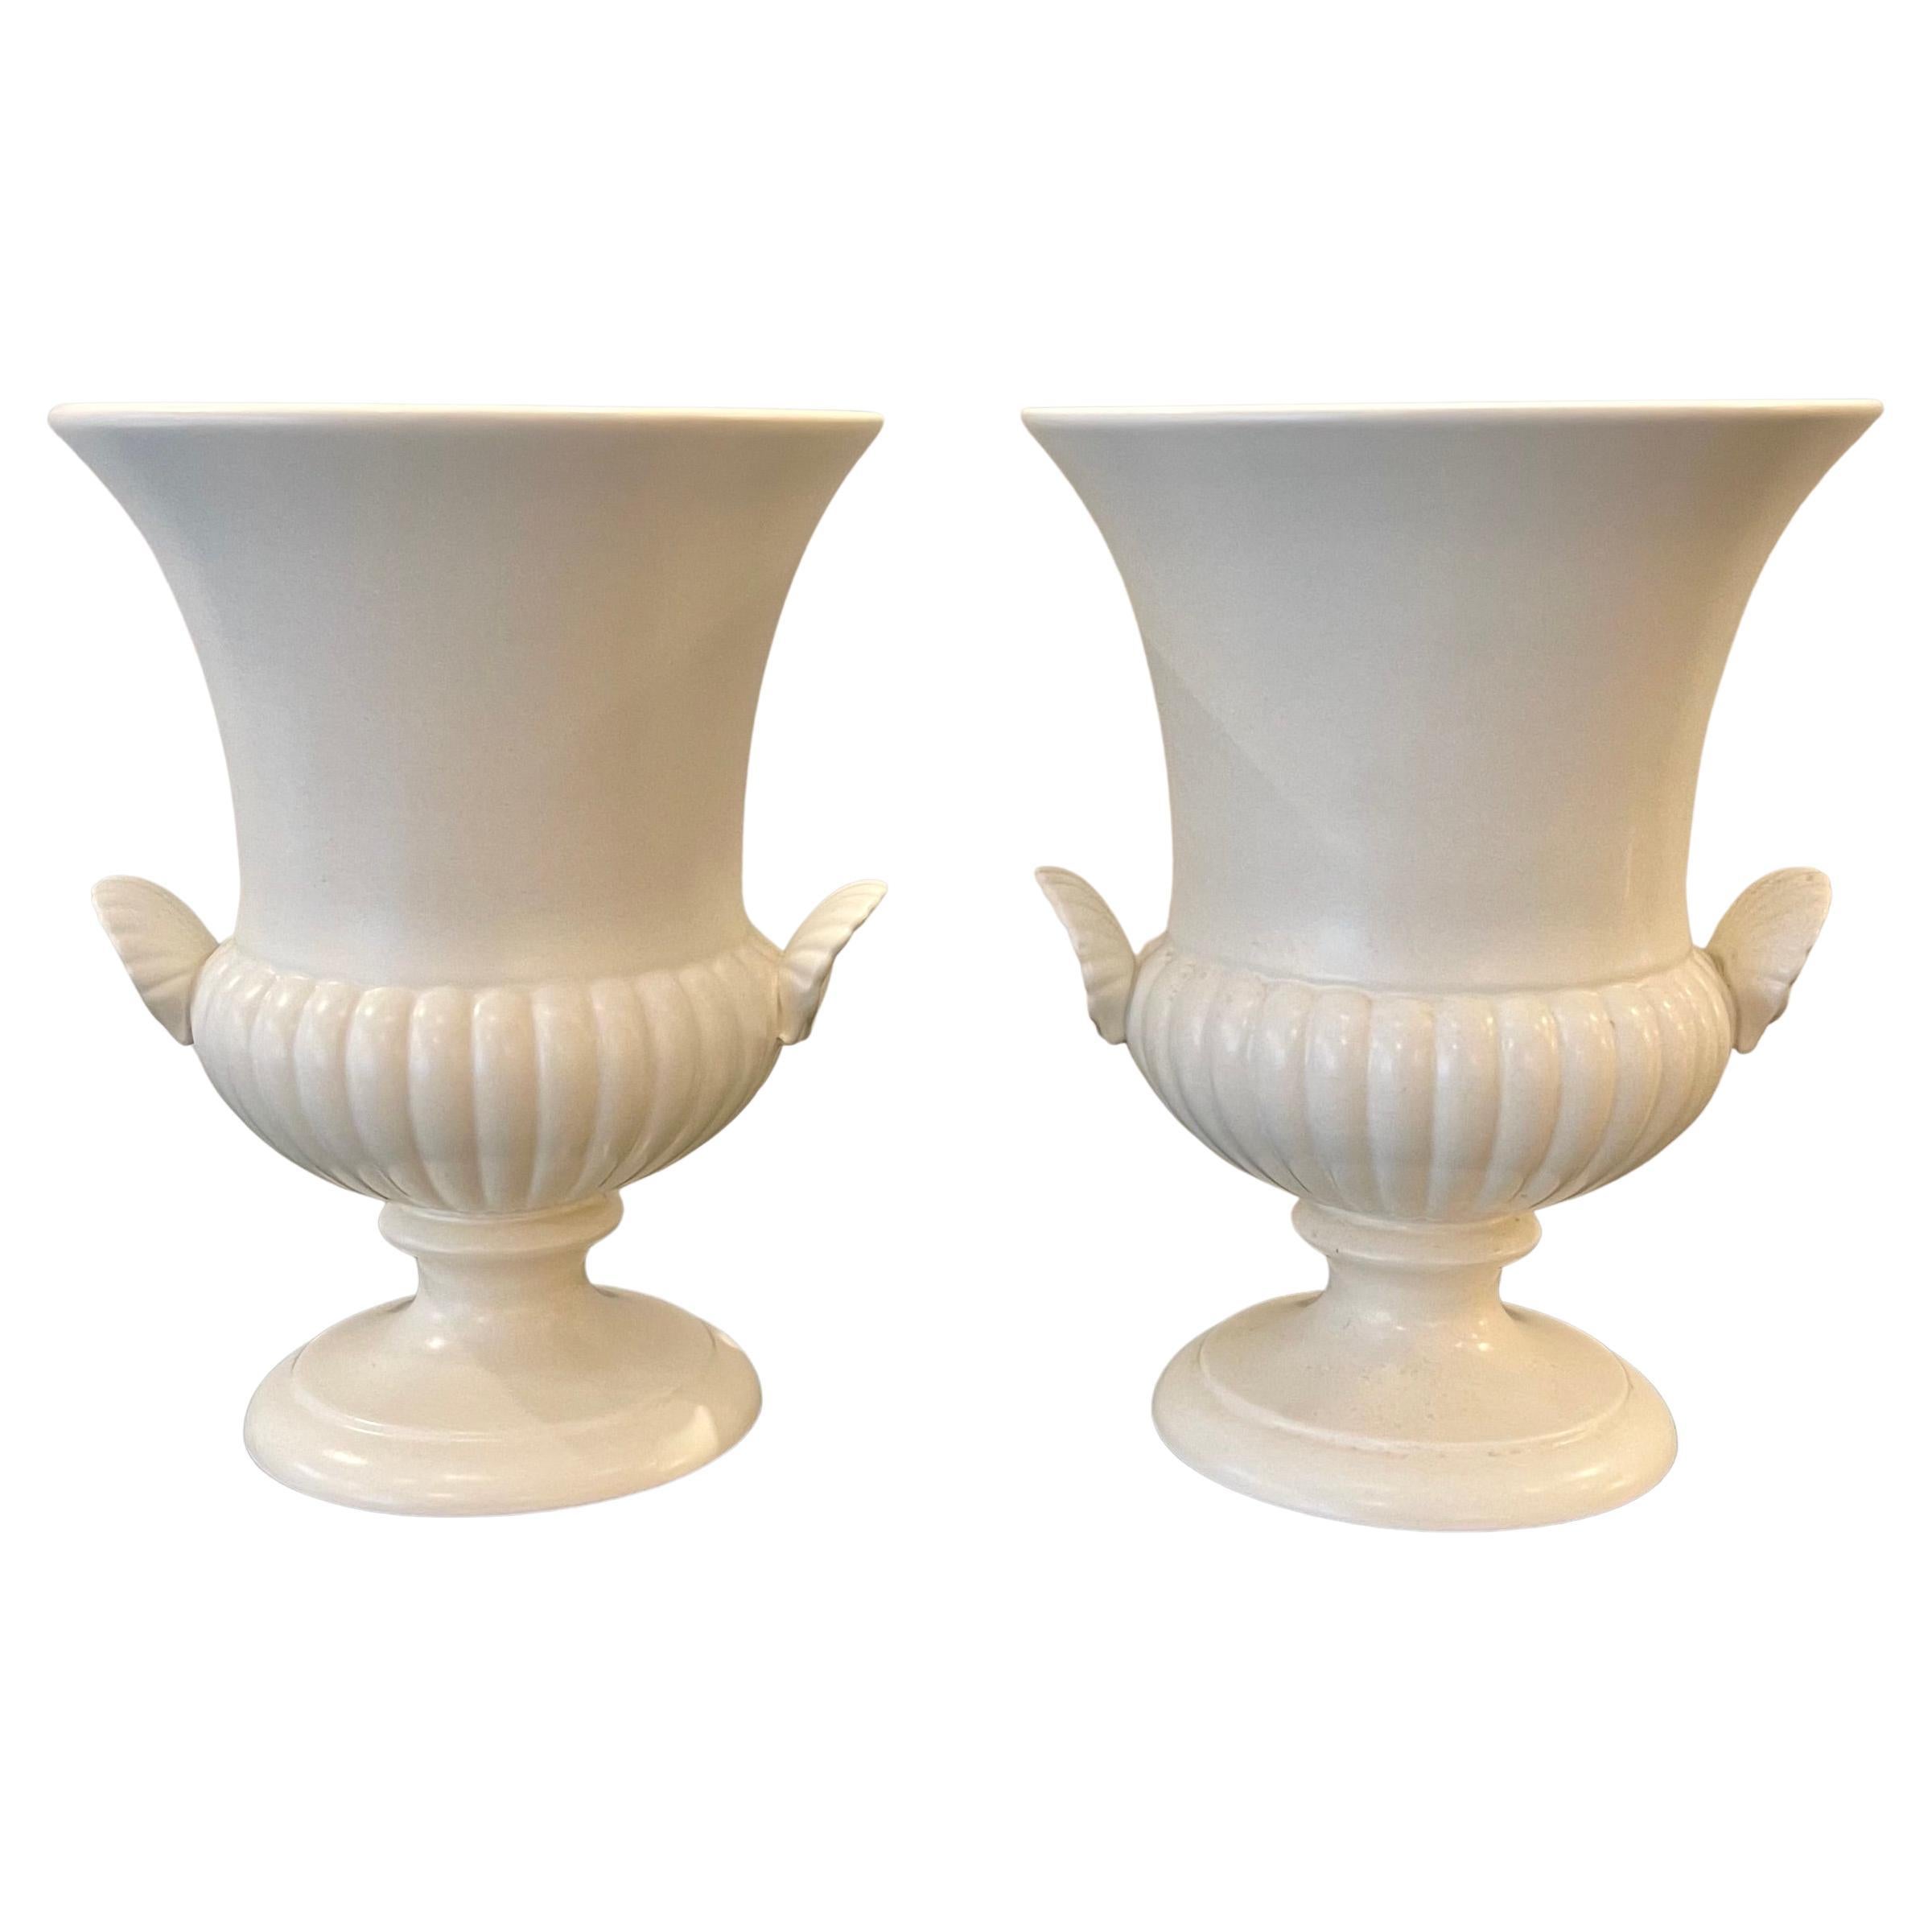 Wedgwood Pair of Pedestal Medici form Shell Twin Handled Urn Vases